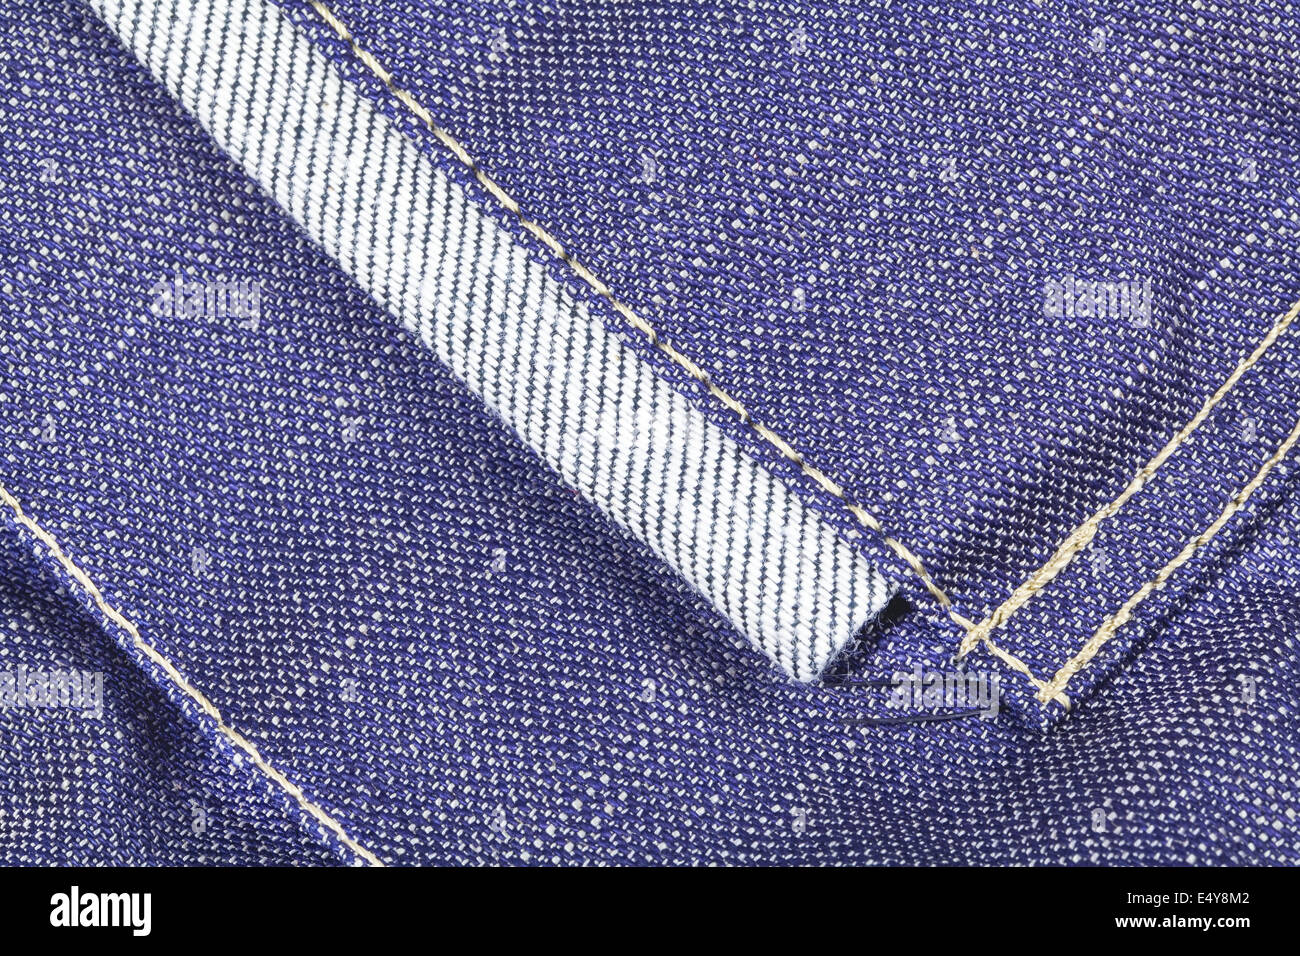 Denim fabric texture with seams Stock Photo